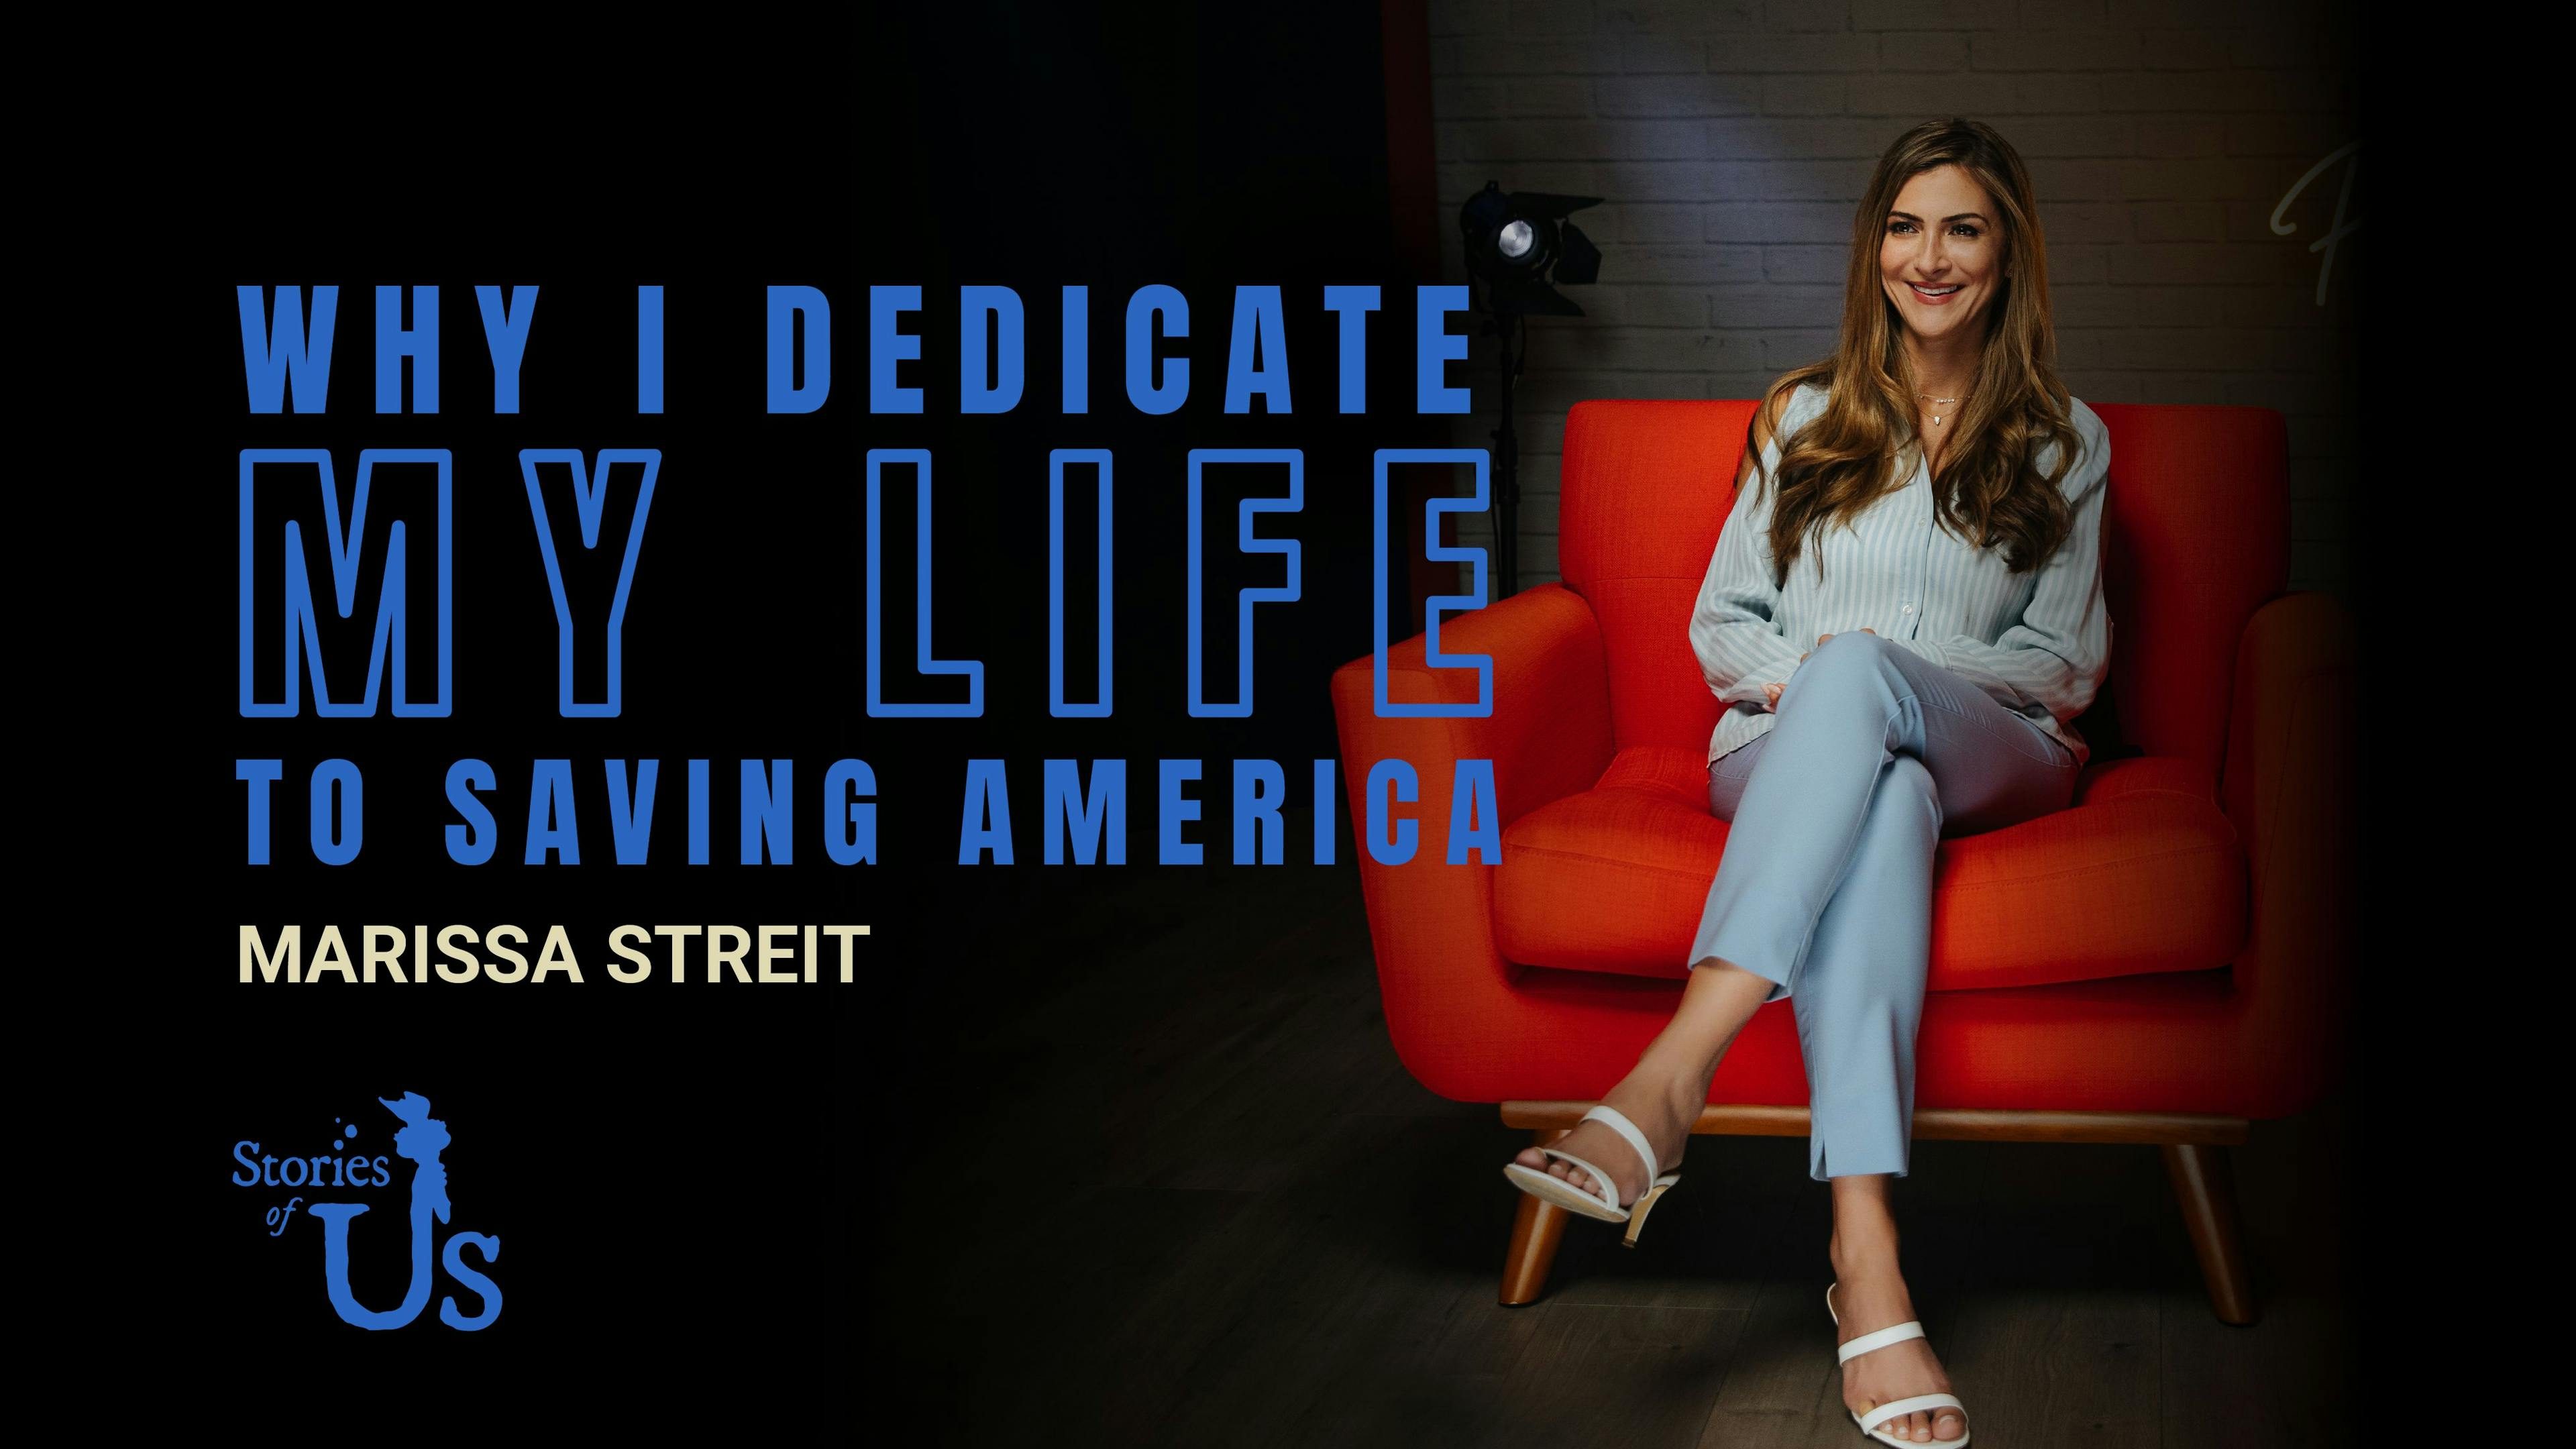 Marissa Streit: Why I Dedicate My Life to Saving America